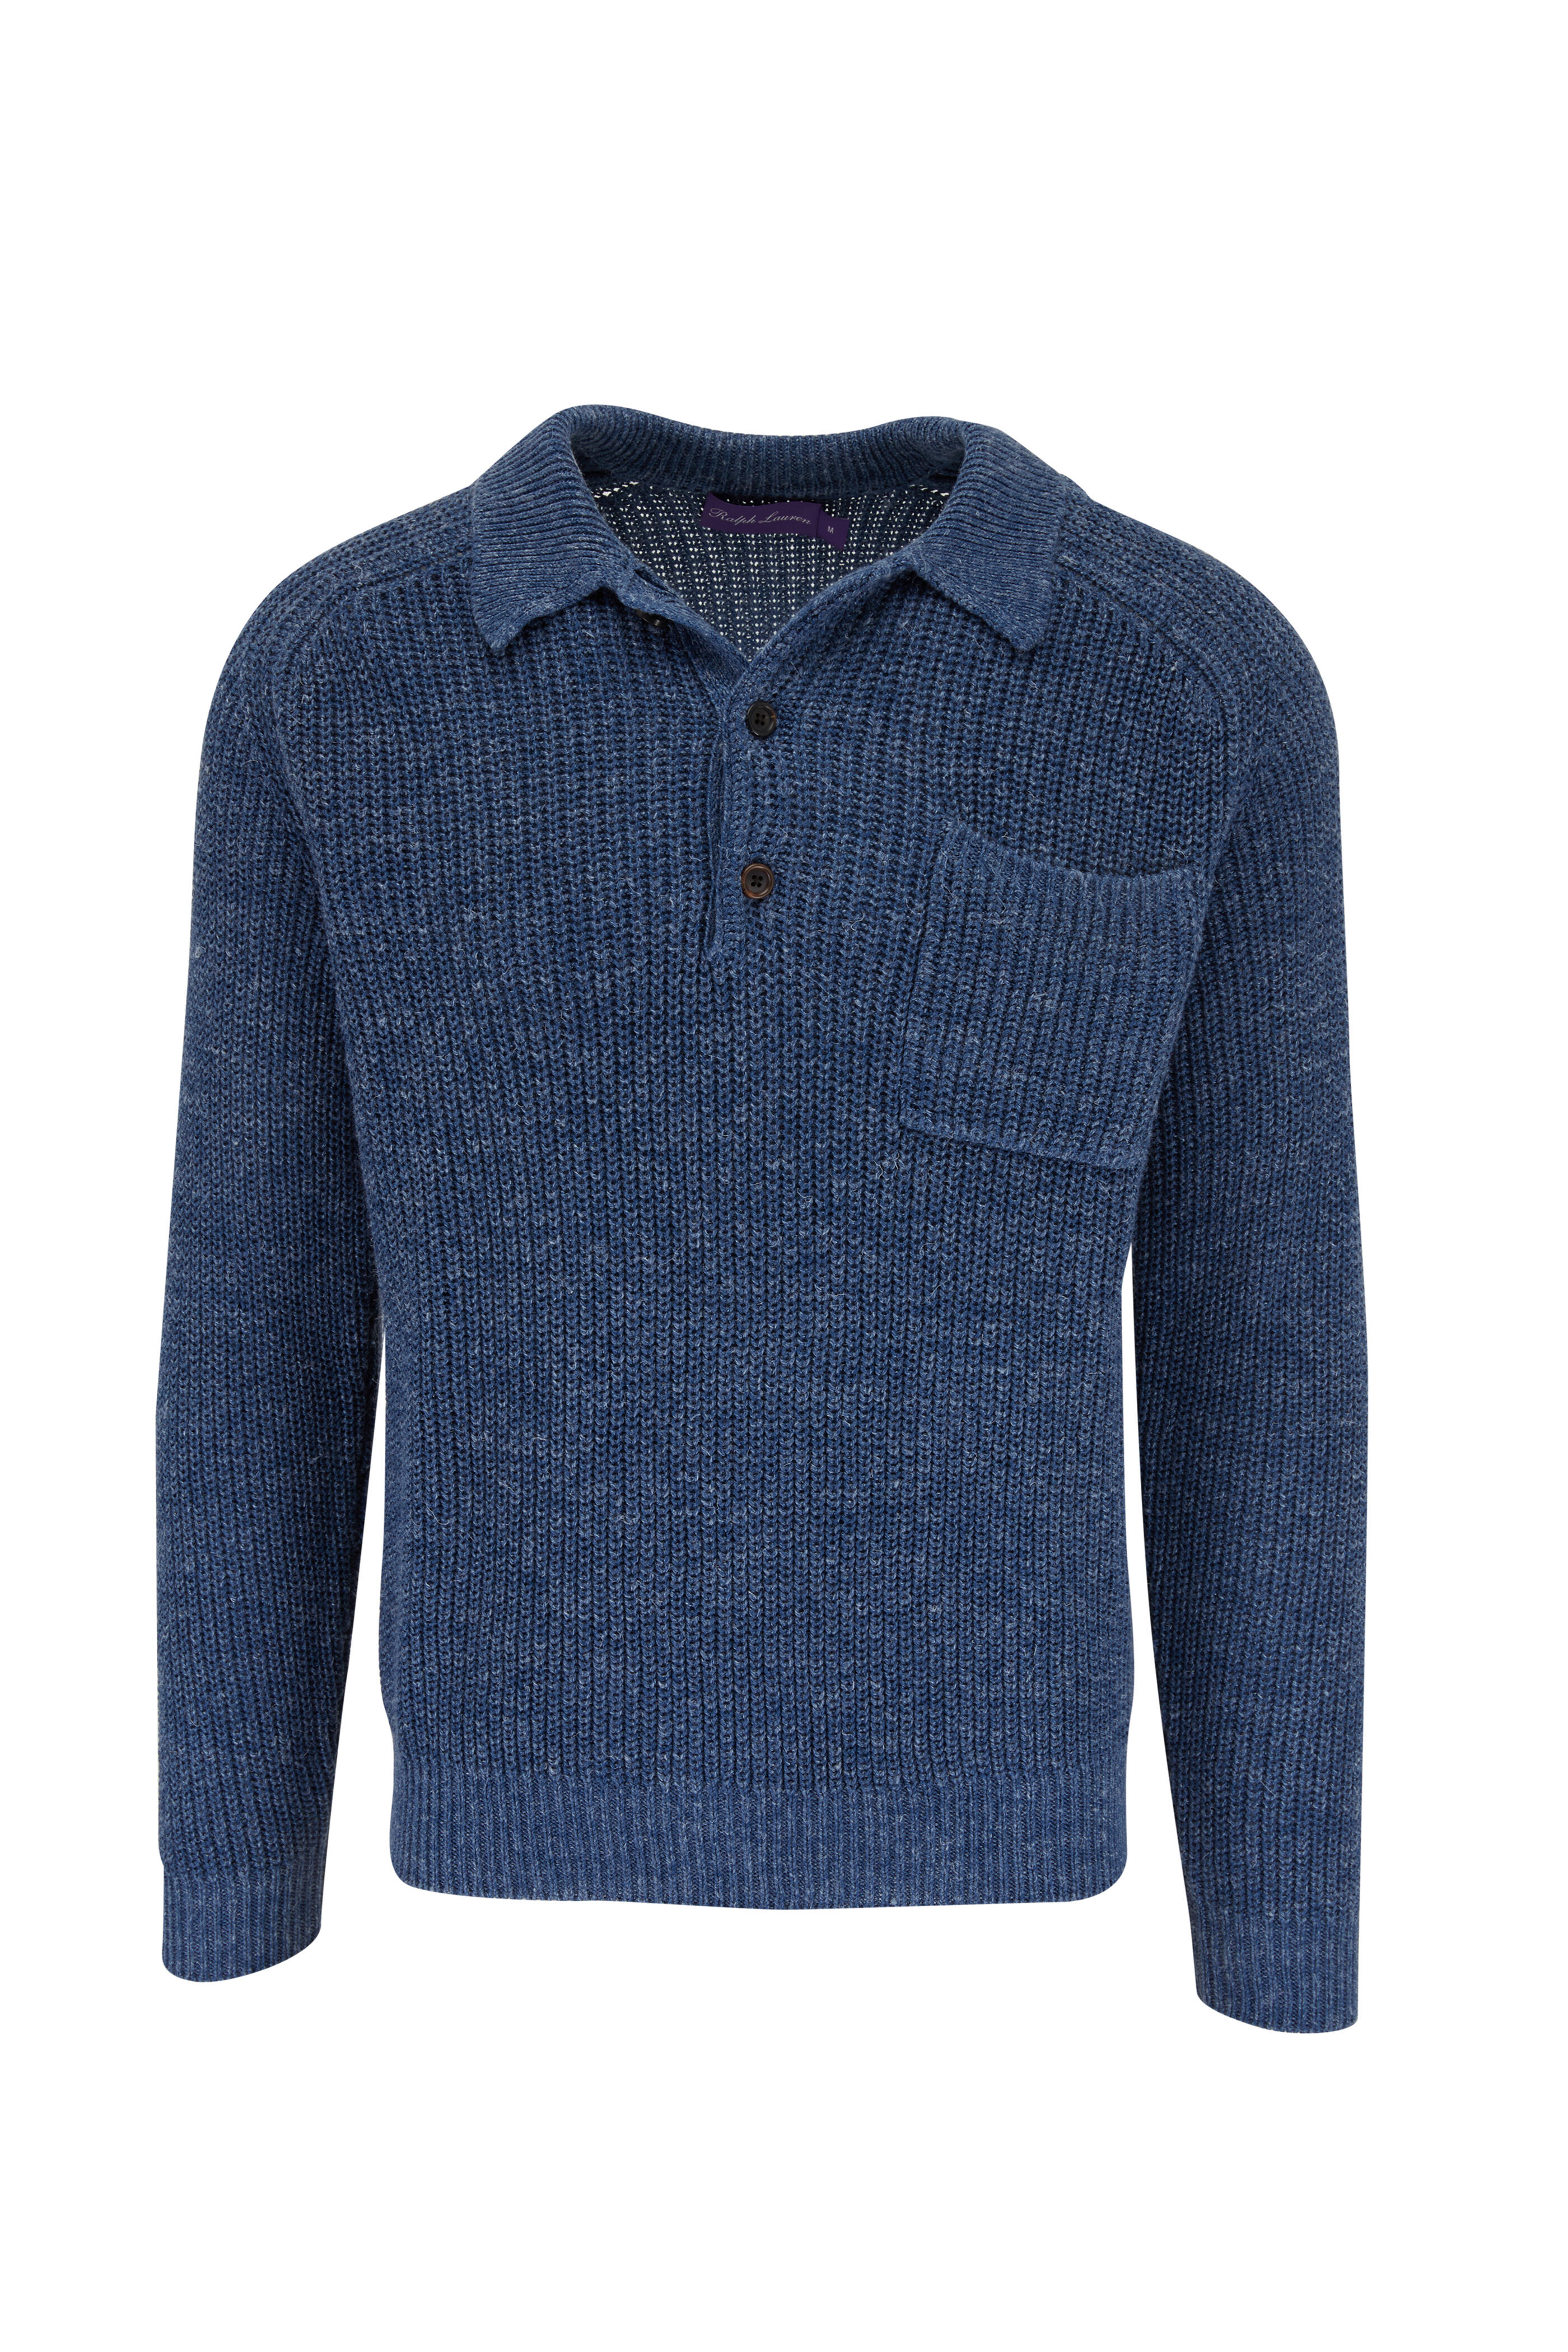 Ralph Lauren Purple Label - Fairfax Blue Ribbed Silk & Linen Polo Sweater